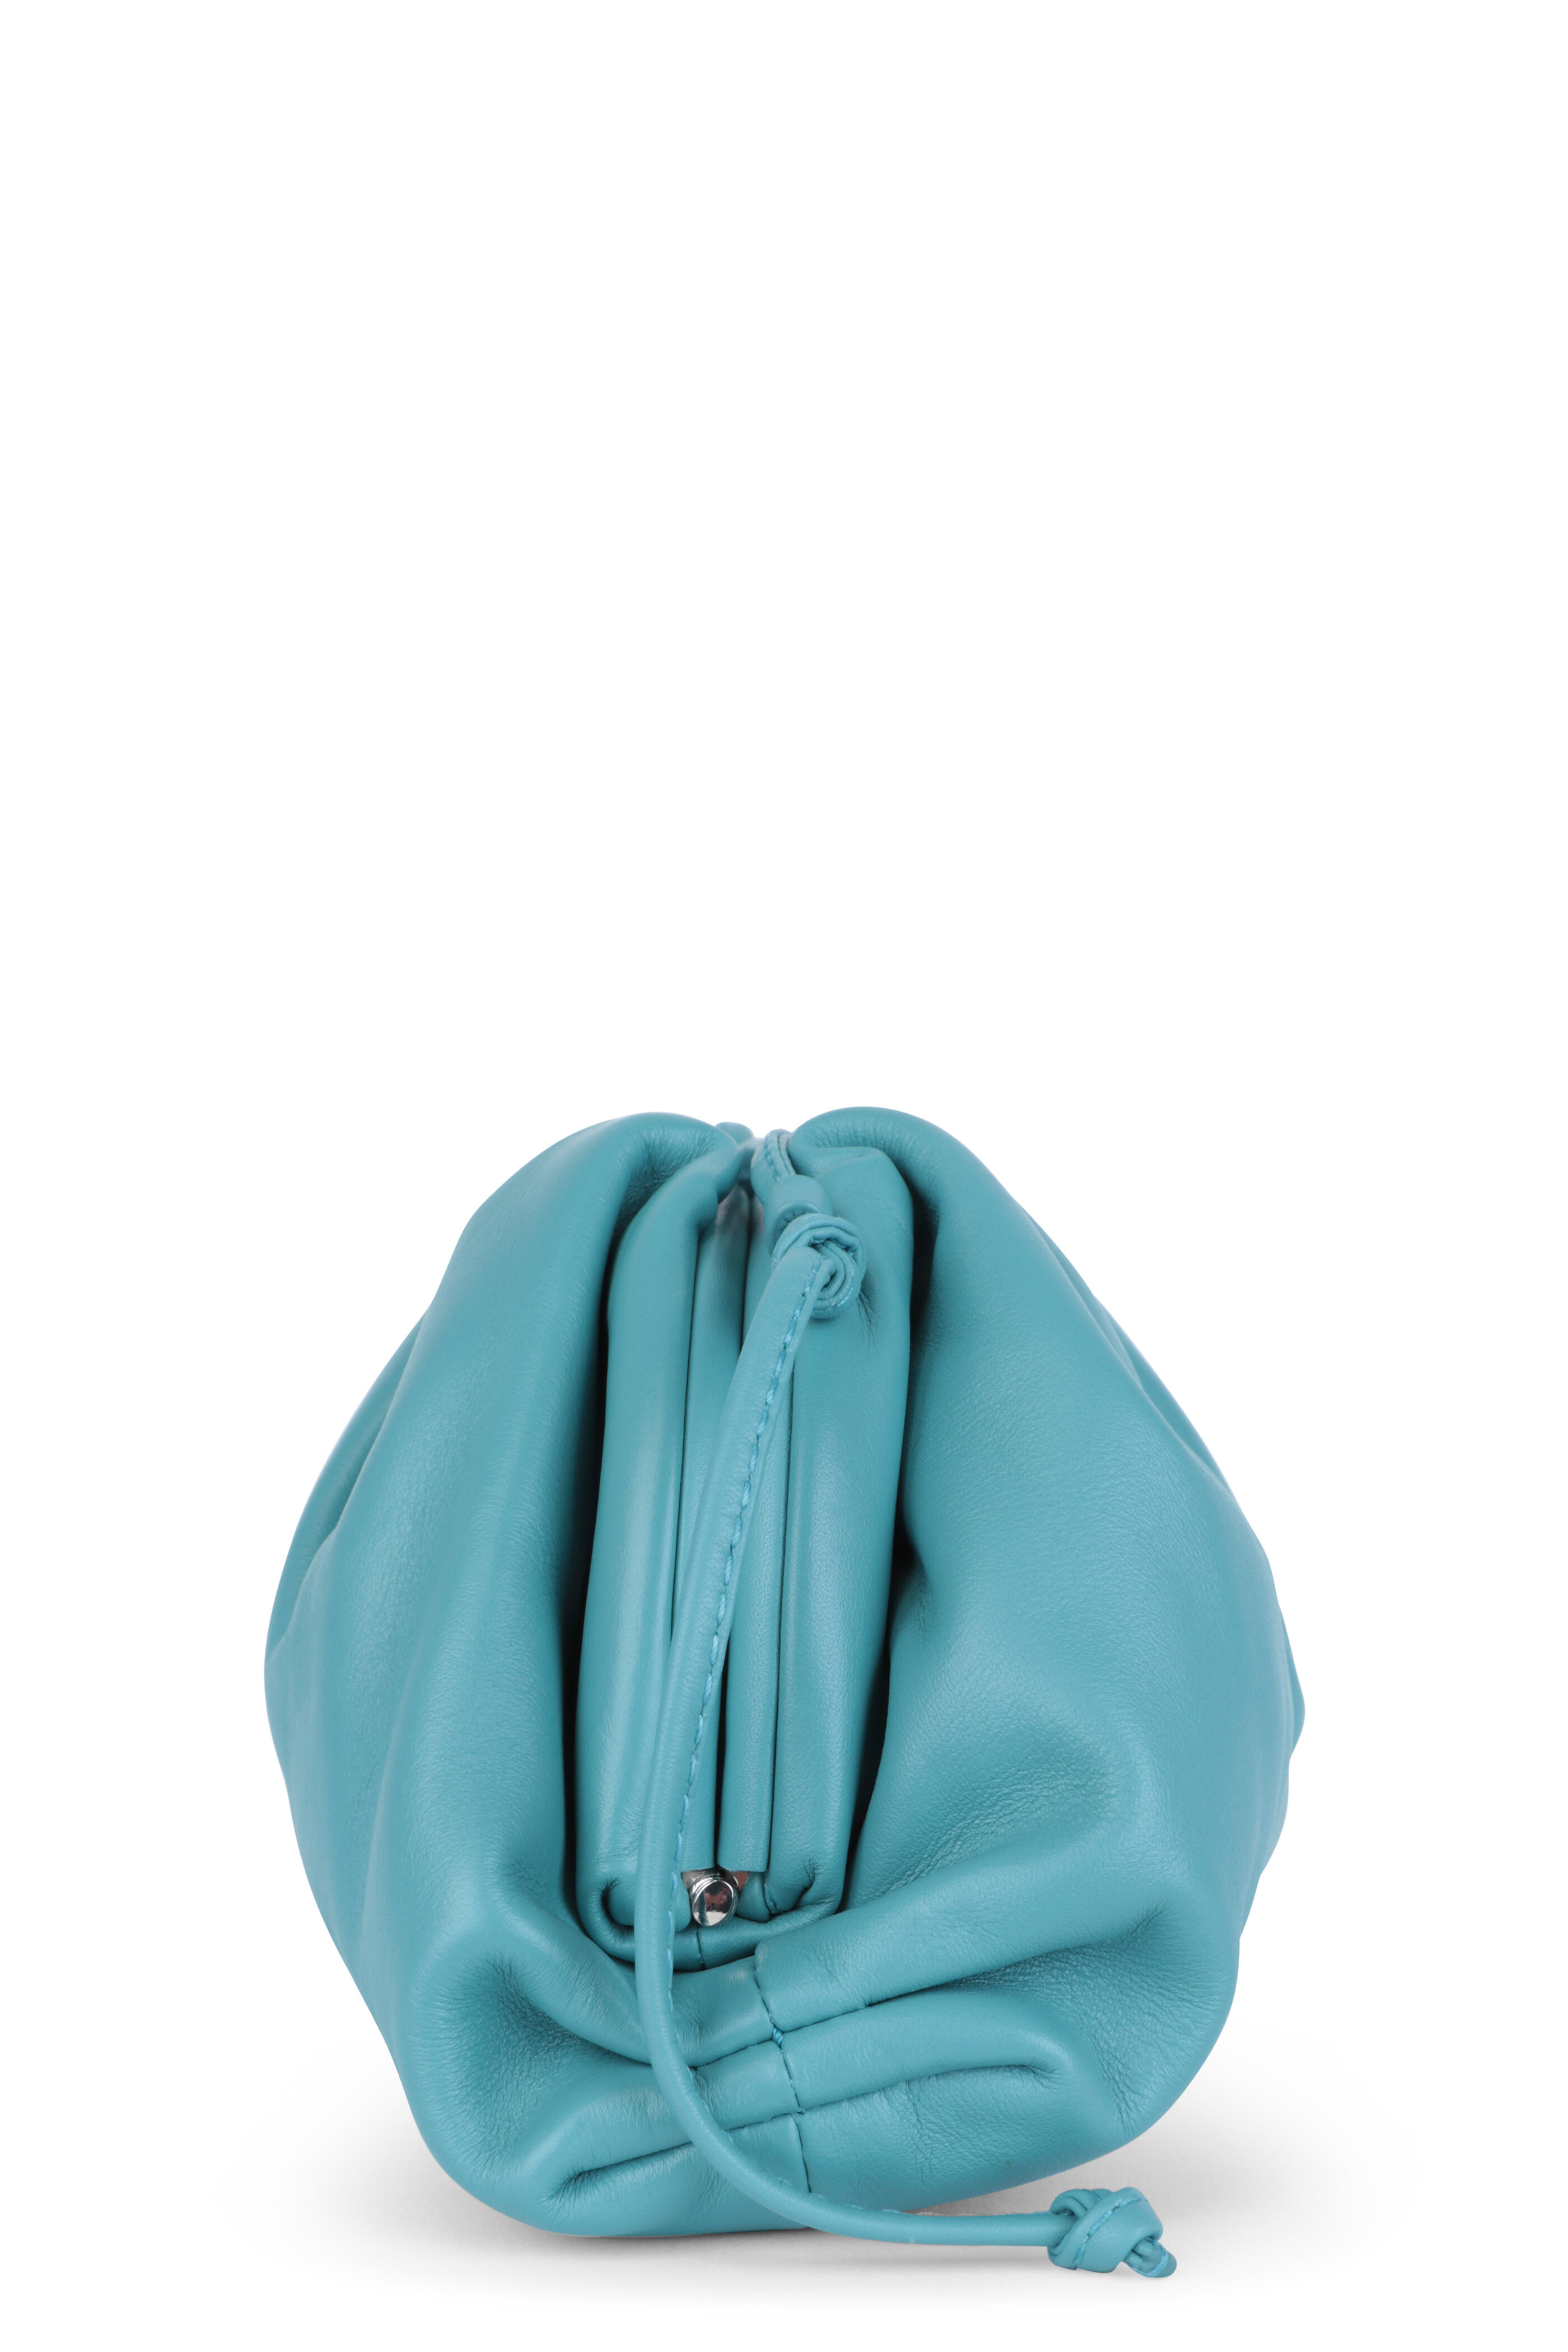 Bottega Veneta - The Pouch Turquoise Leather Small Crossbody Bag